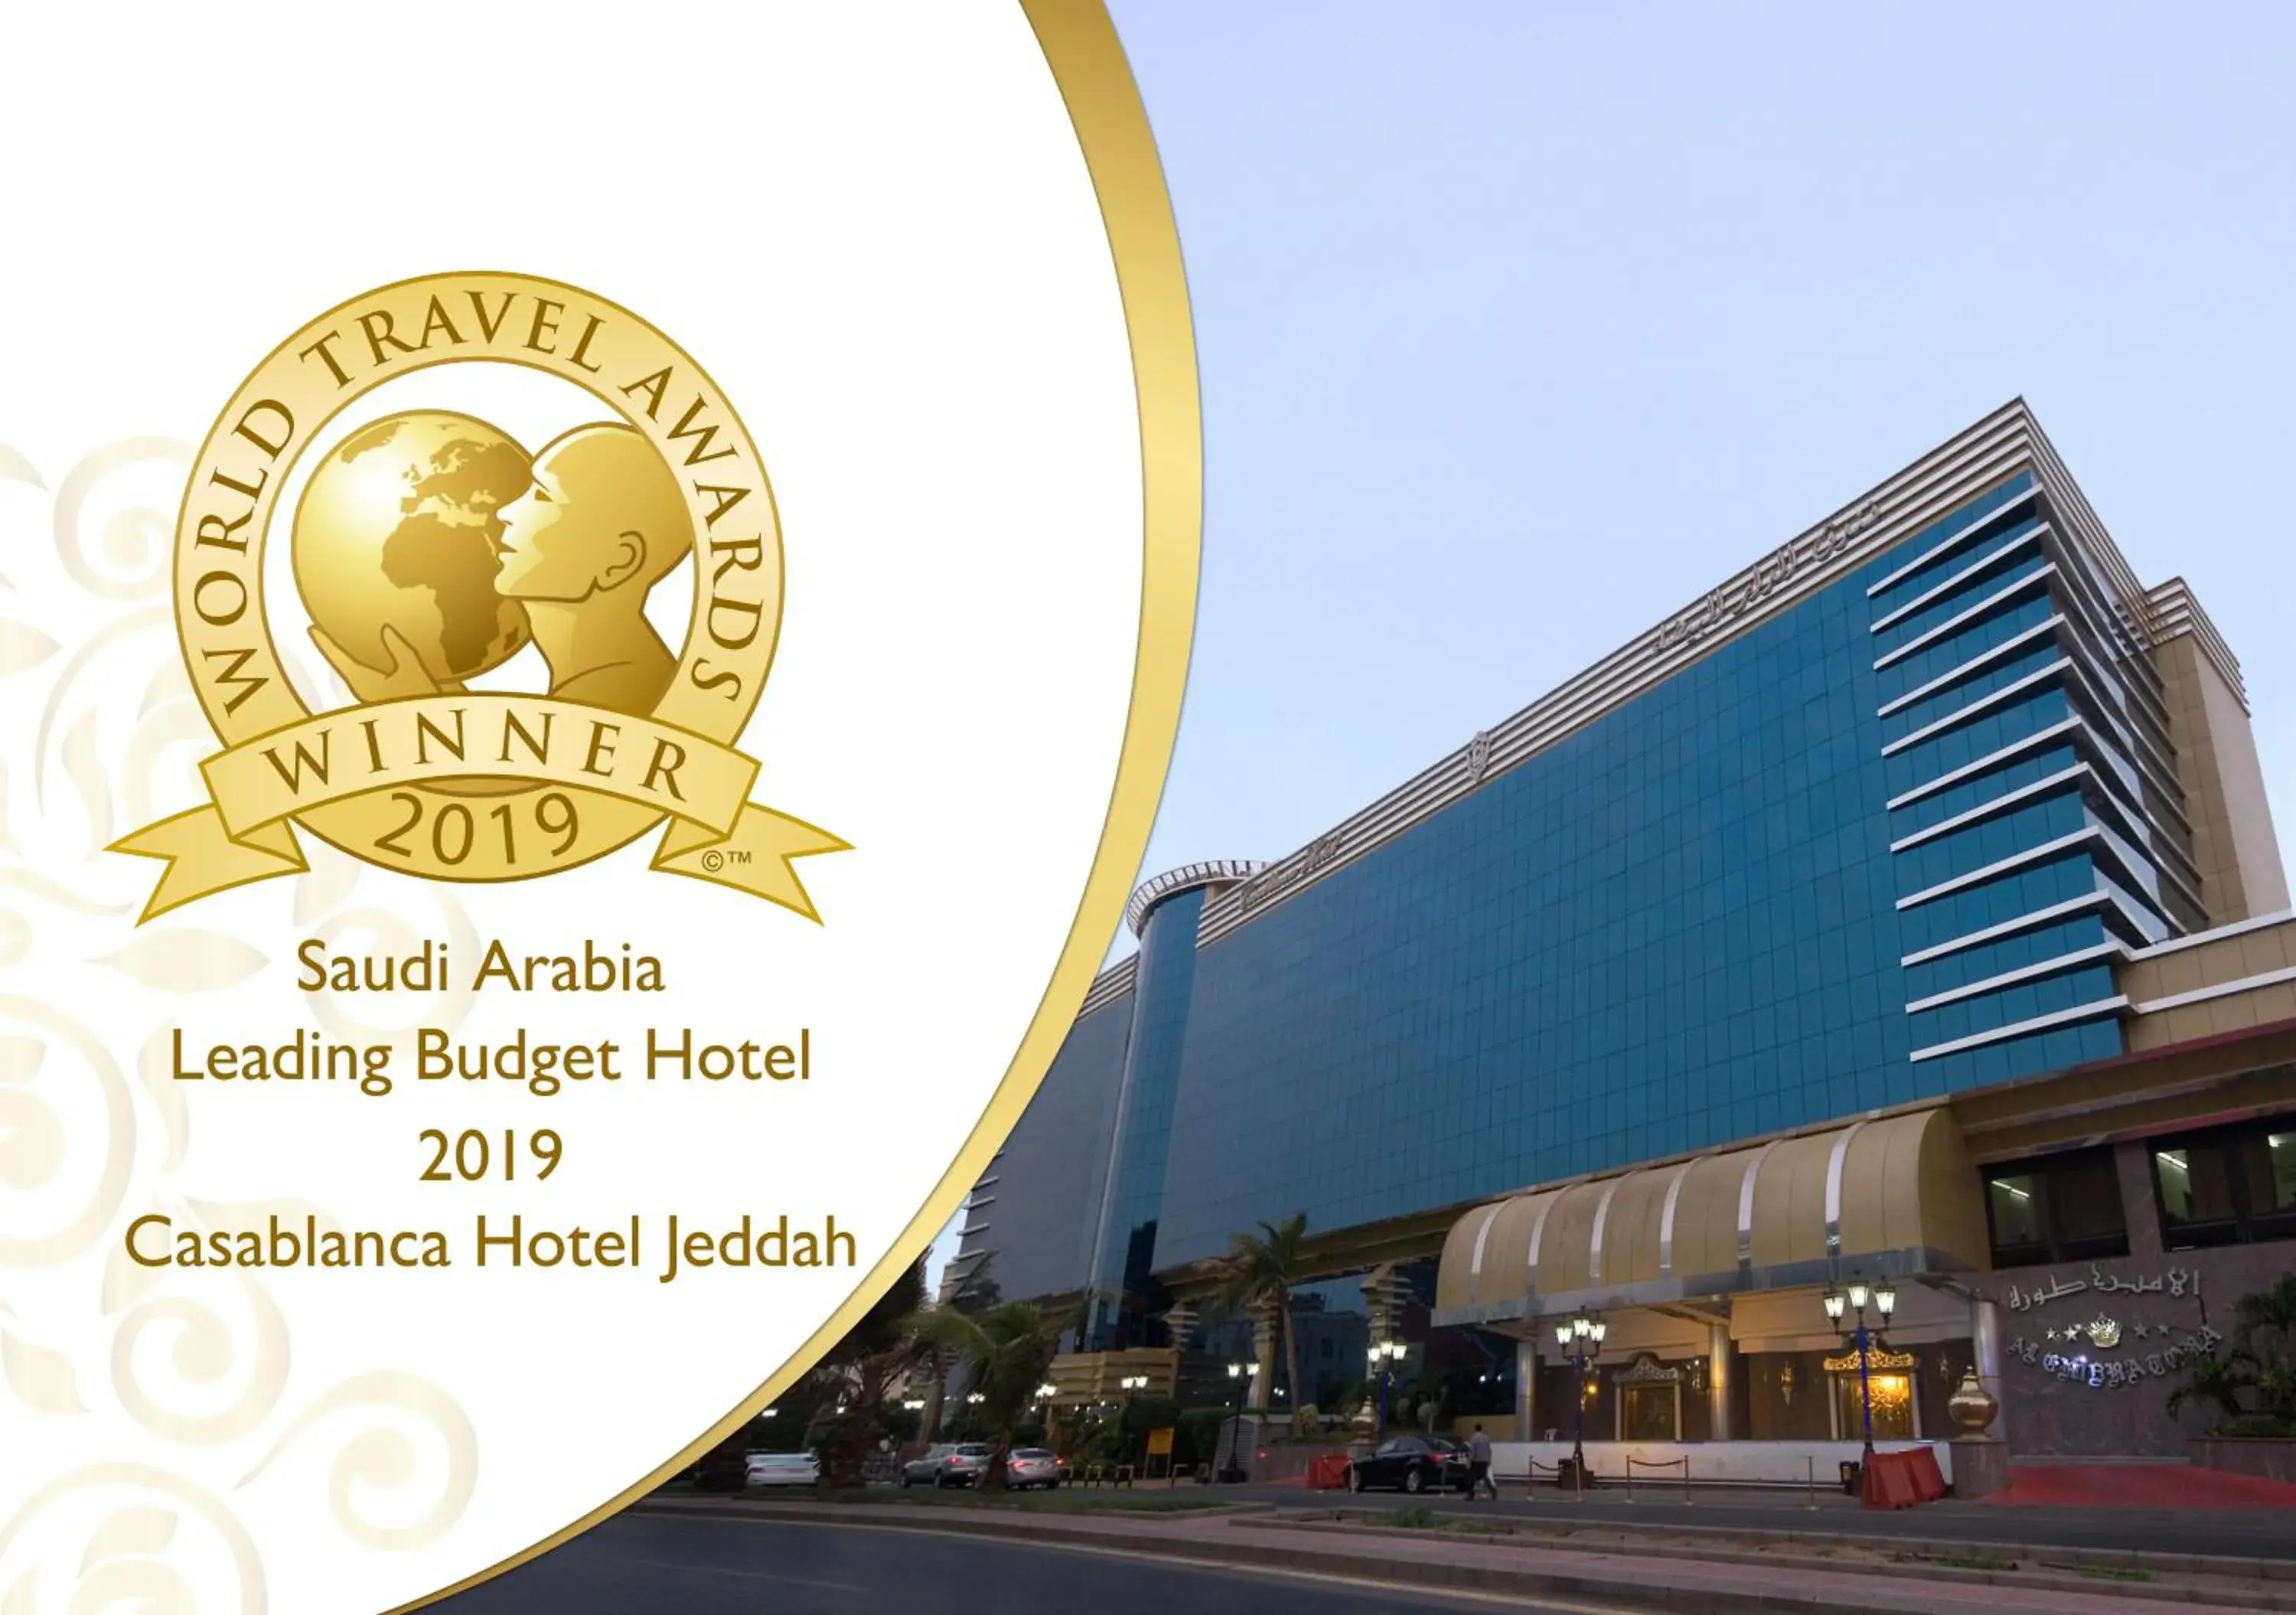 Logo/Certificate/Sign, Property Building in Casablanca Hotel Jeddah